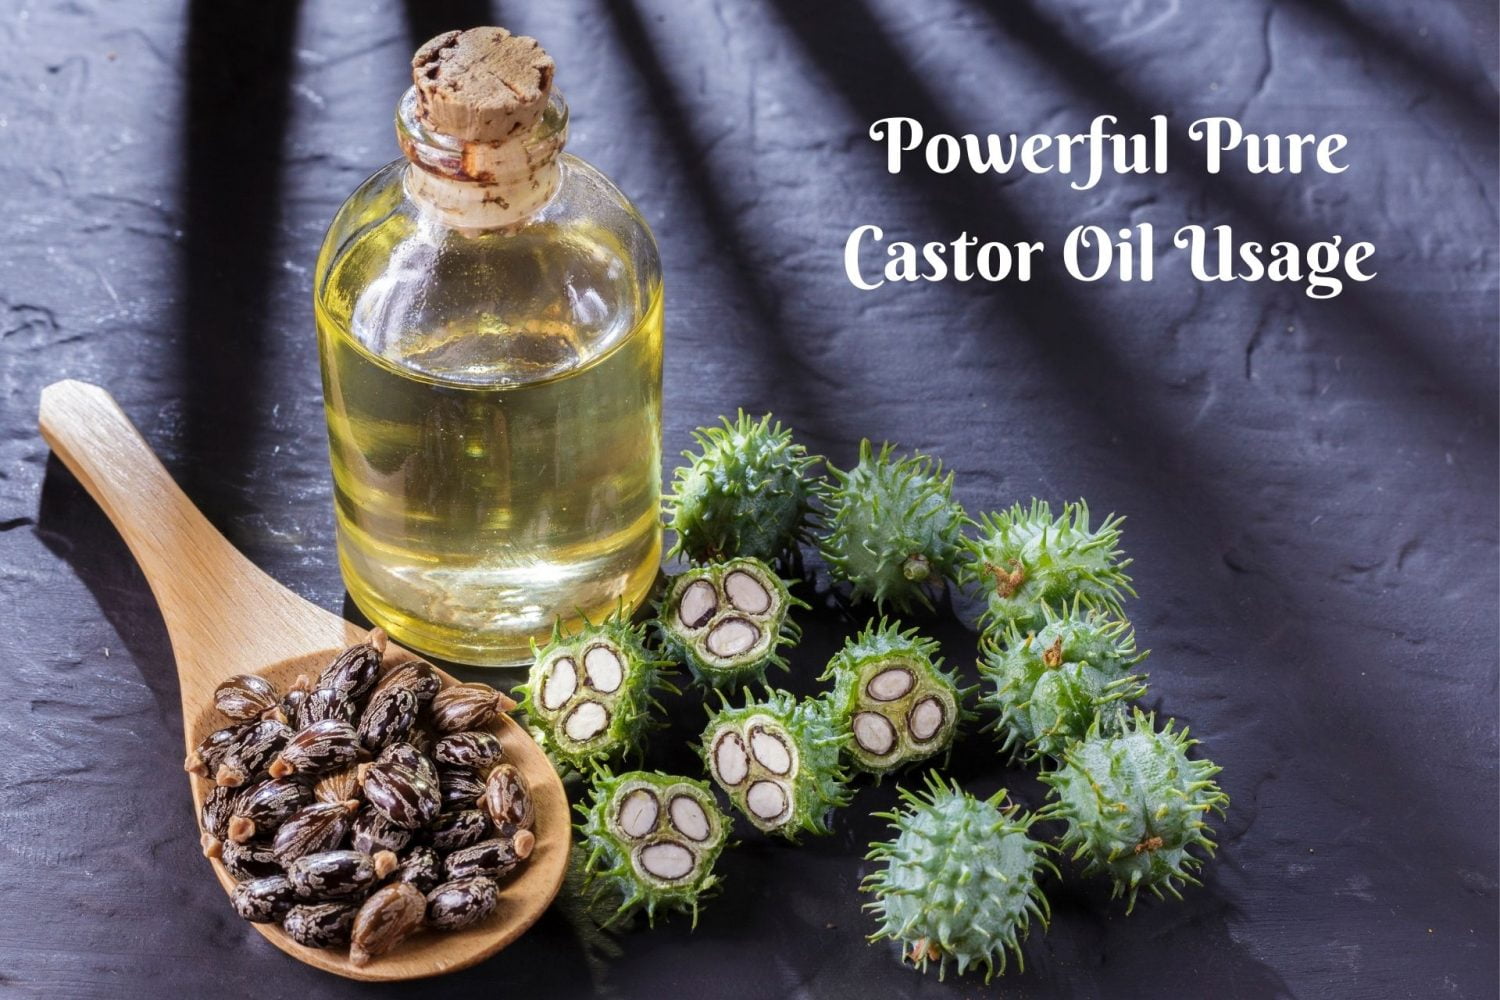 Castor oil usage